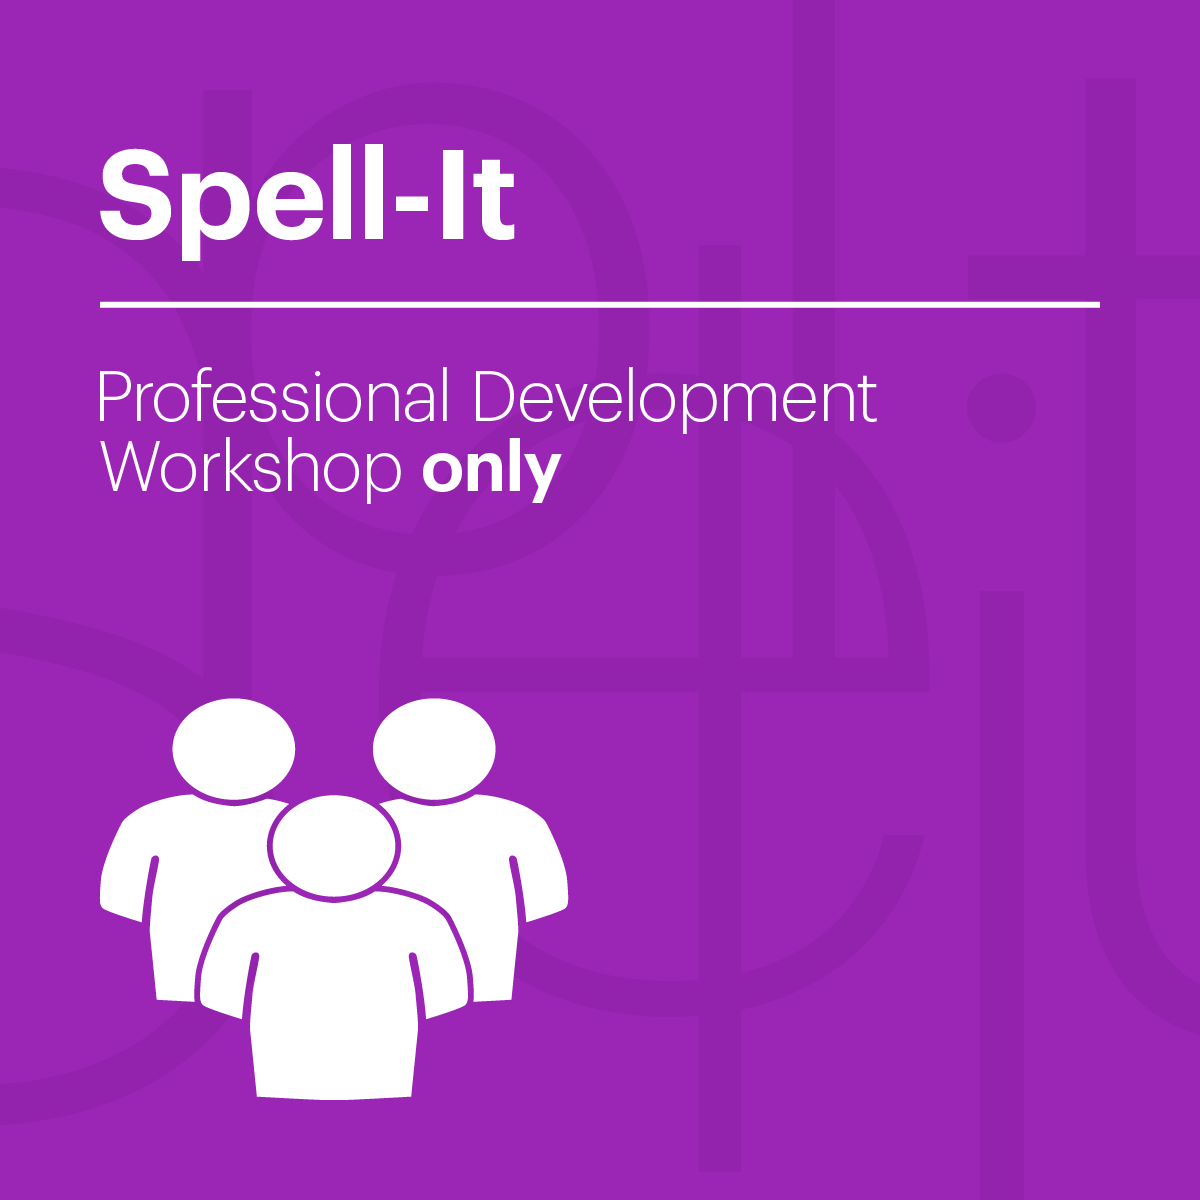 wspe-spell-it-professional-development-workshop-image01-01